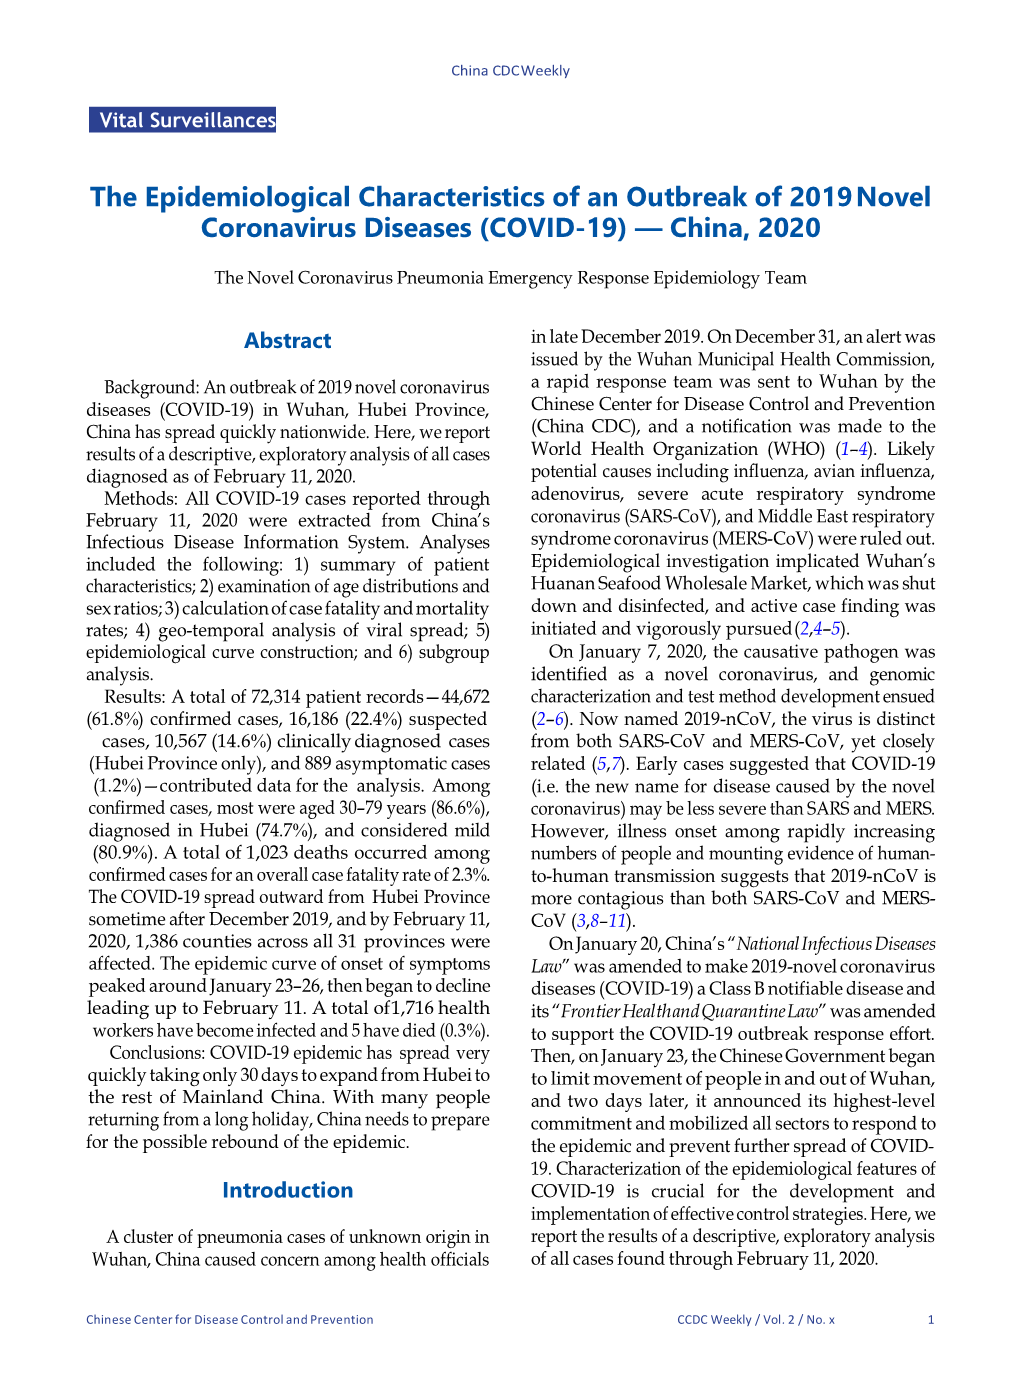 The Epidemiological Characteristics of an Outbreak of 2019 Novel Coronavirus Diseases (COVID-19) — China, 2020